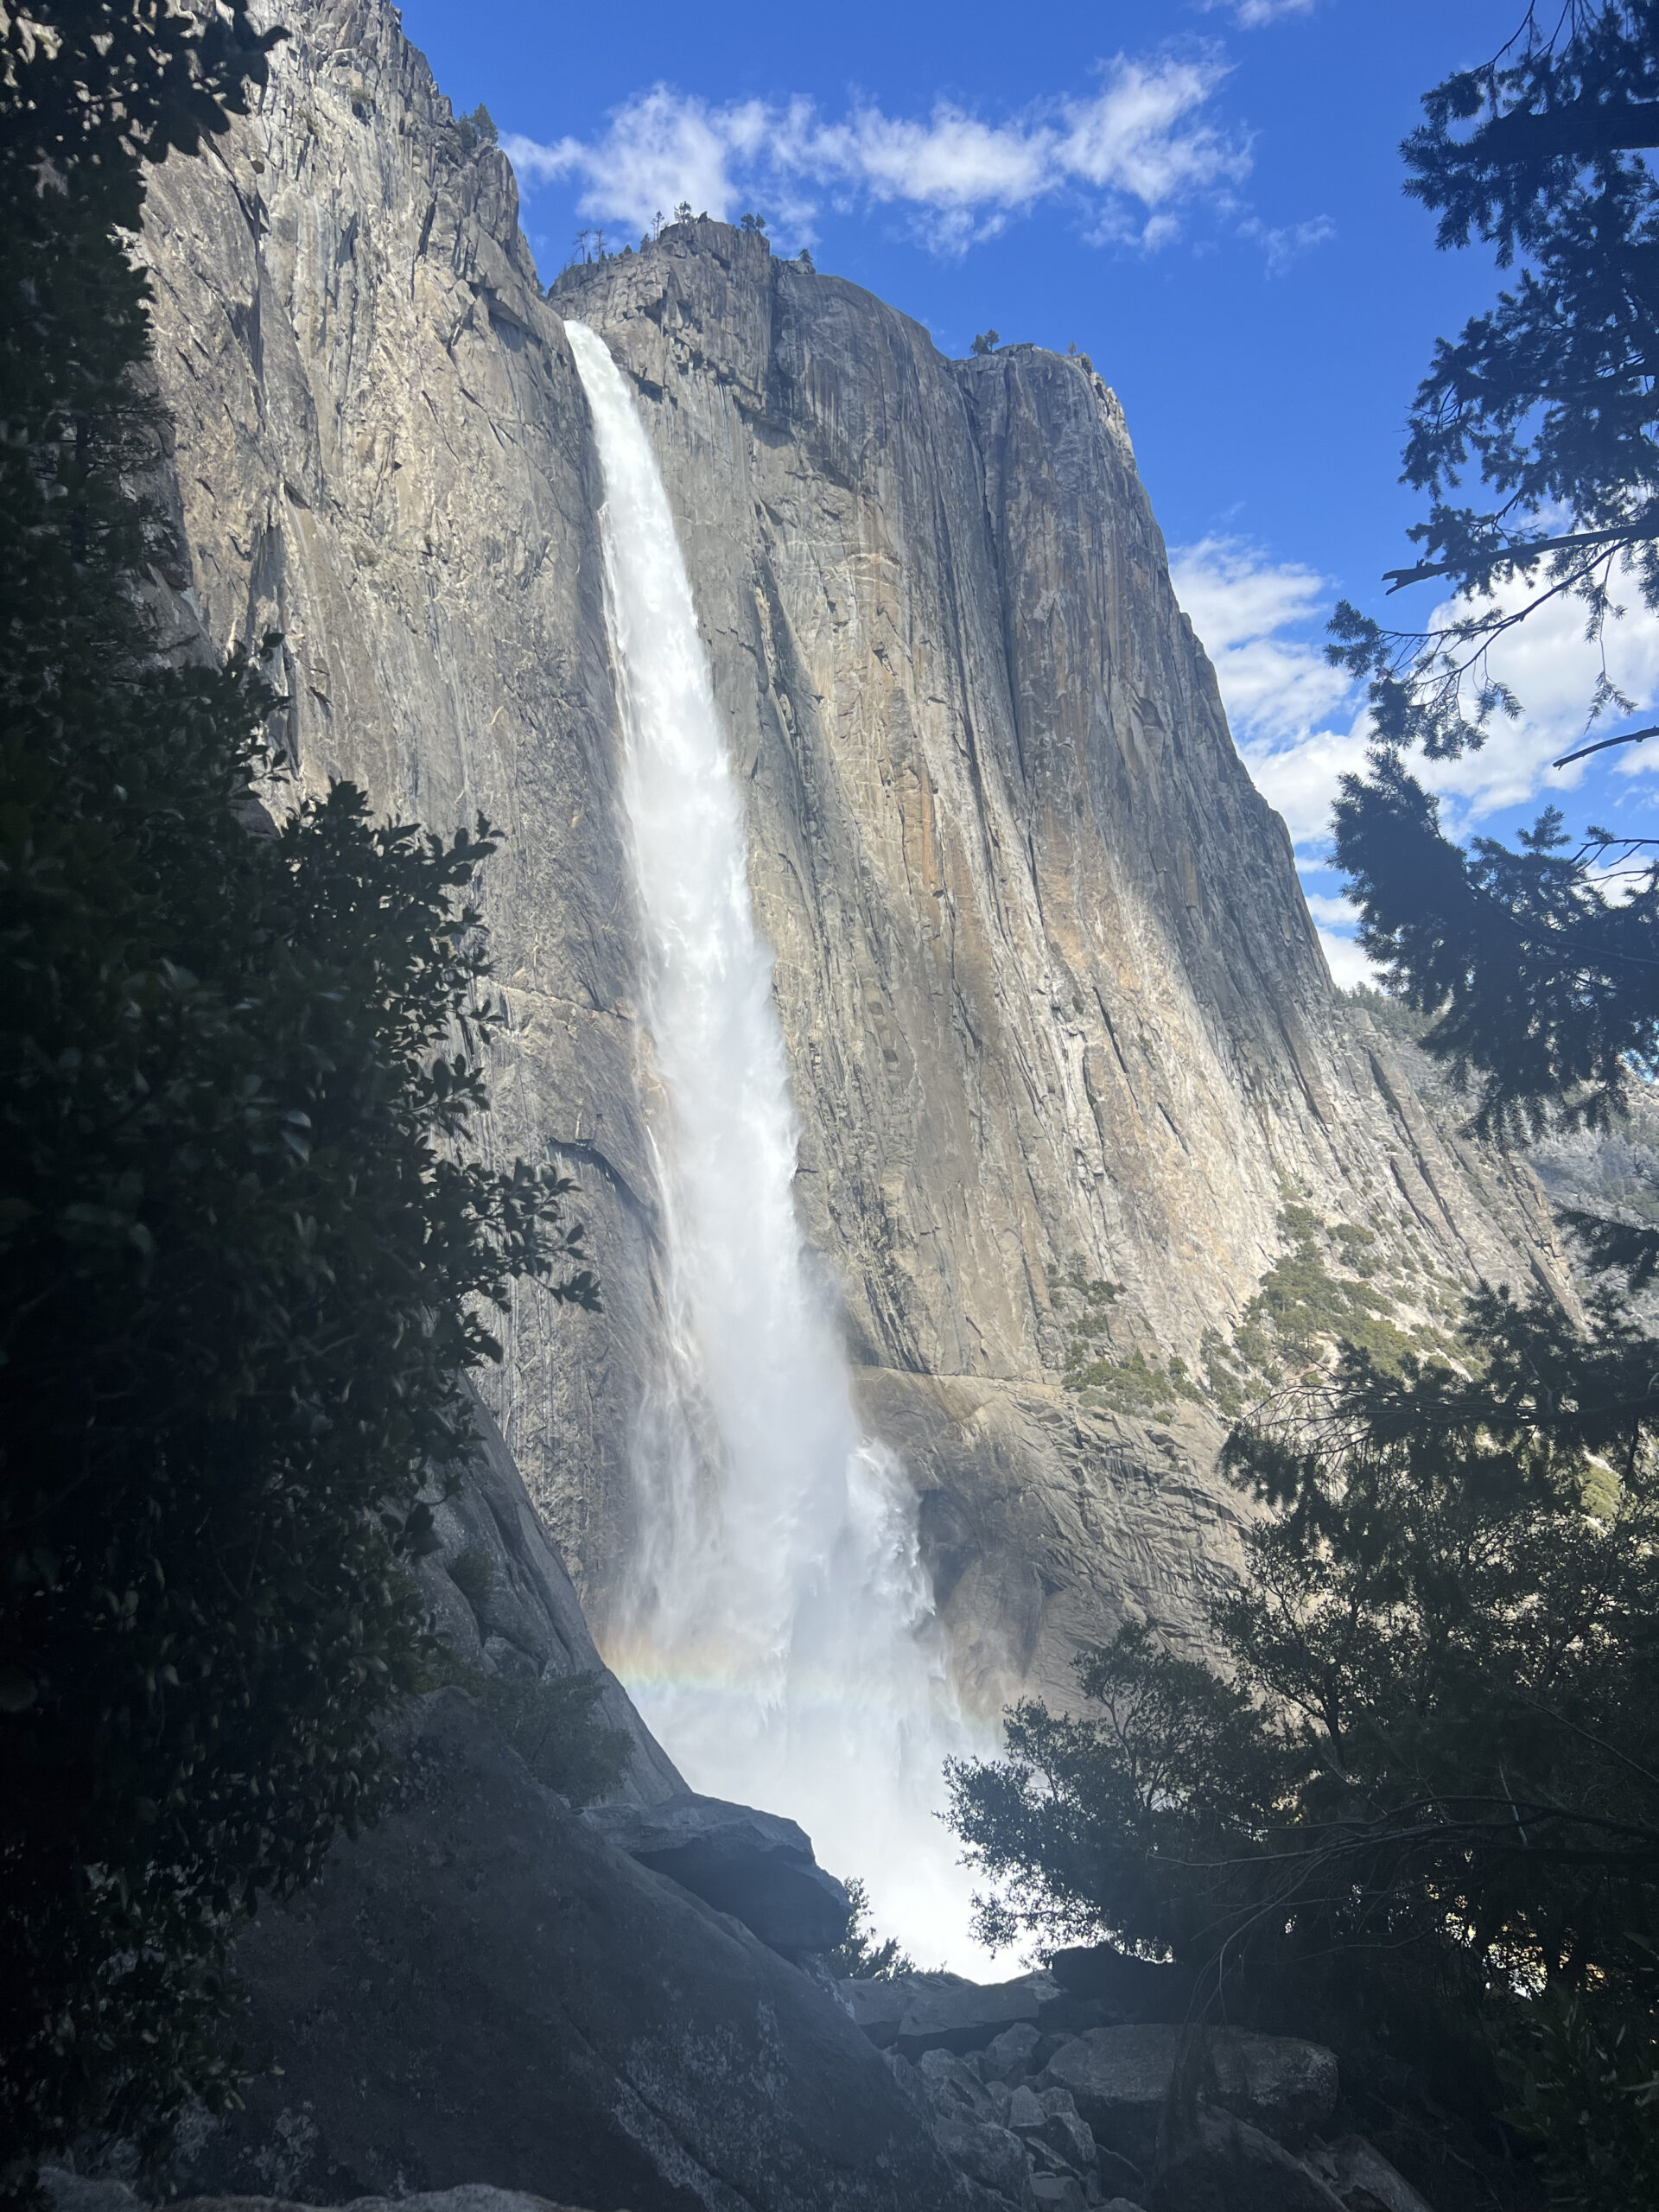 A Guide to Hiking Upper Yosemite Falls